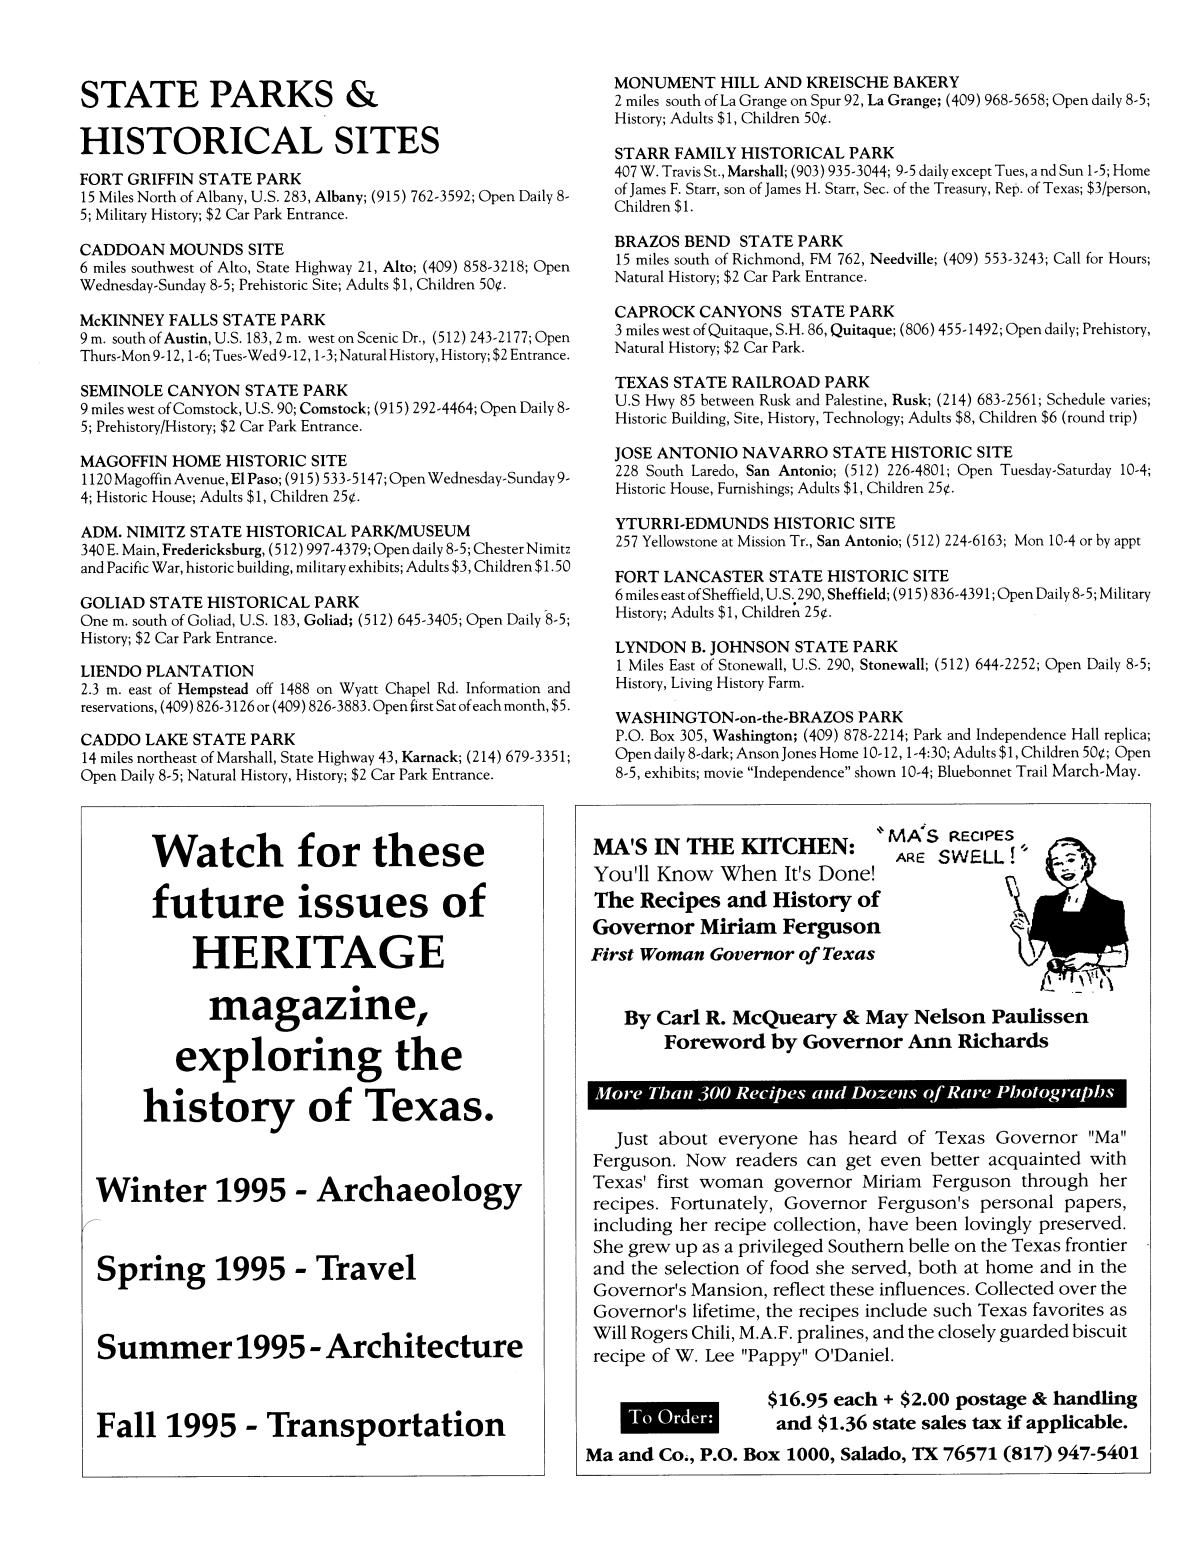 Heritage, Volume 12, Number 4, Fall 1994
                                                
                                                    31
                                                